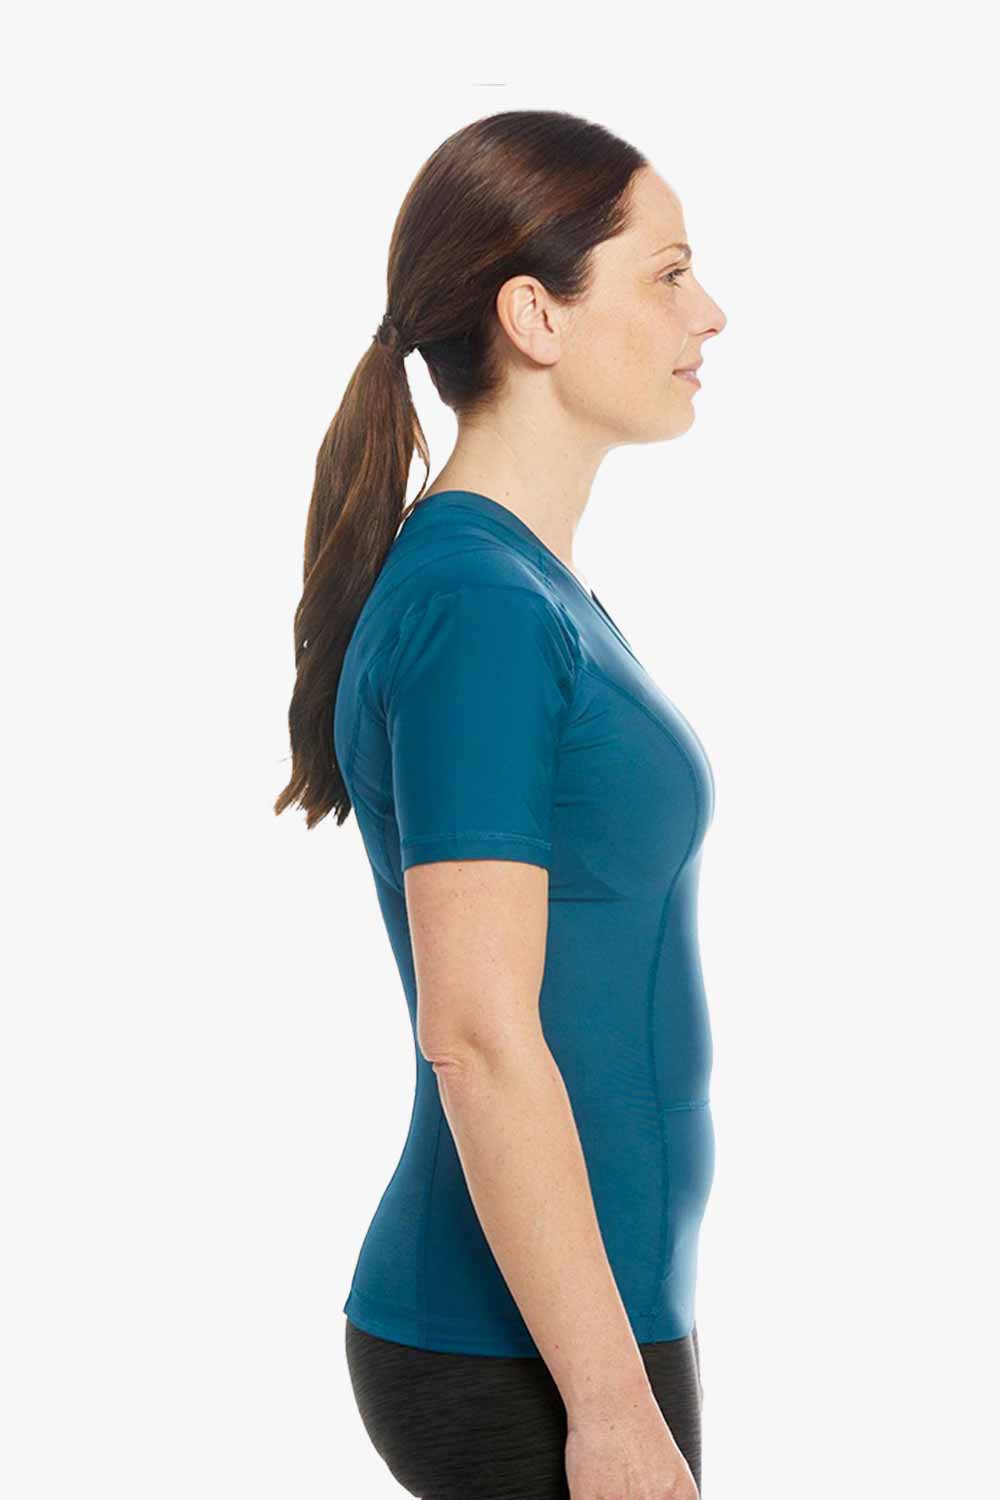 DEMO | Women's Posture Shirt™ - Blau